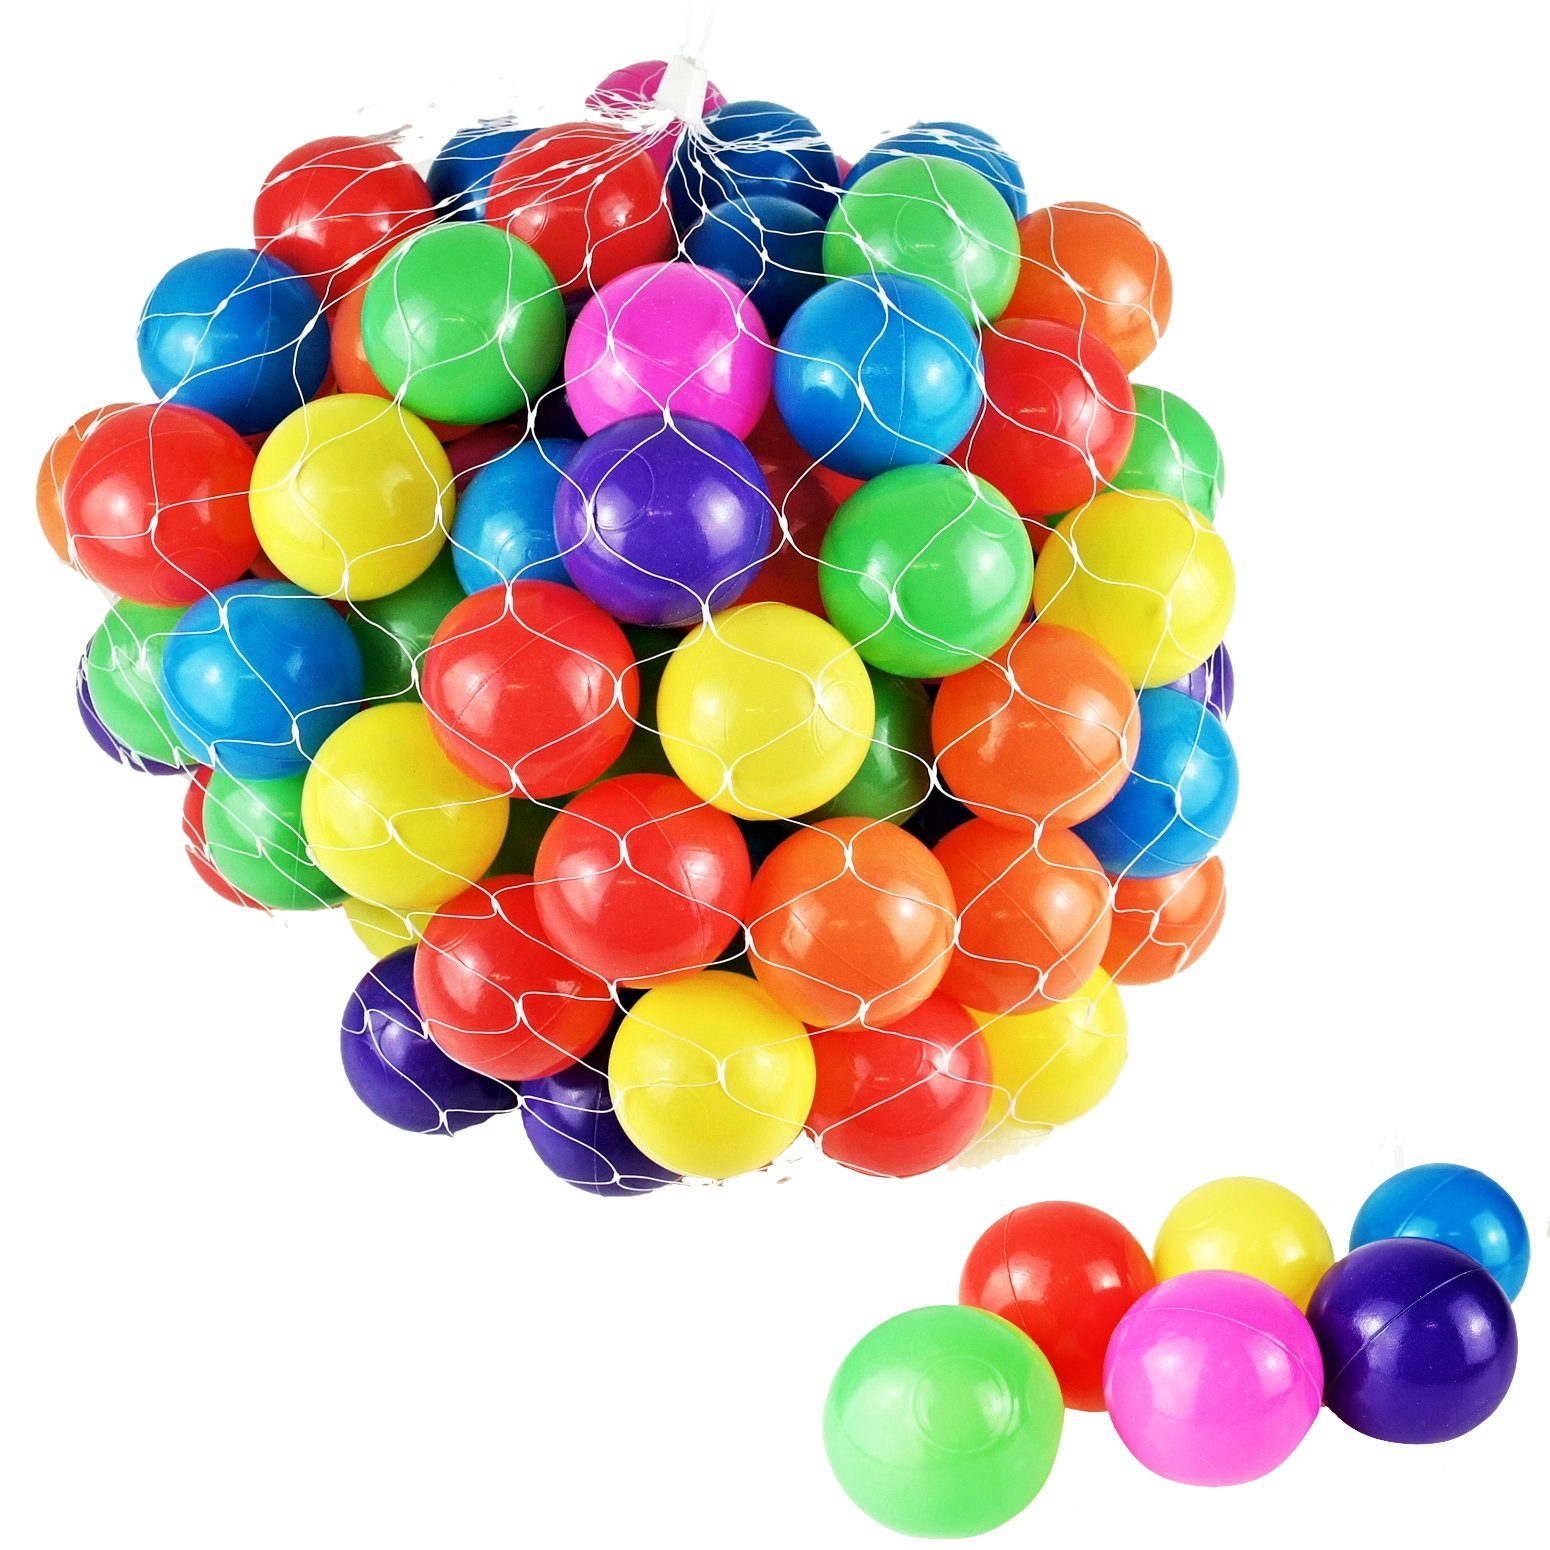 Ø Stück Bälle Bällebad 5,5cm Ball Mischung 500 BAYLI - Bällebad-Bälle - Softba Farben bunte